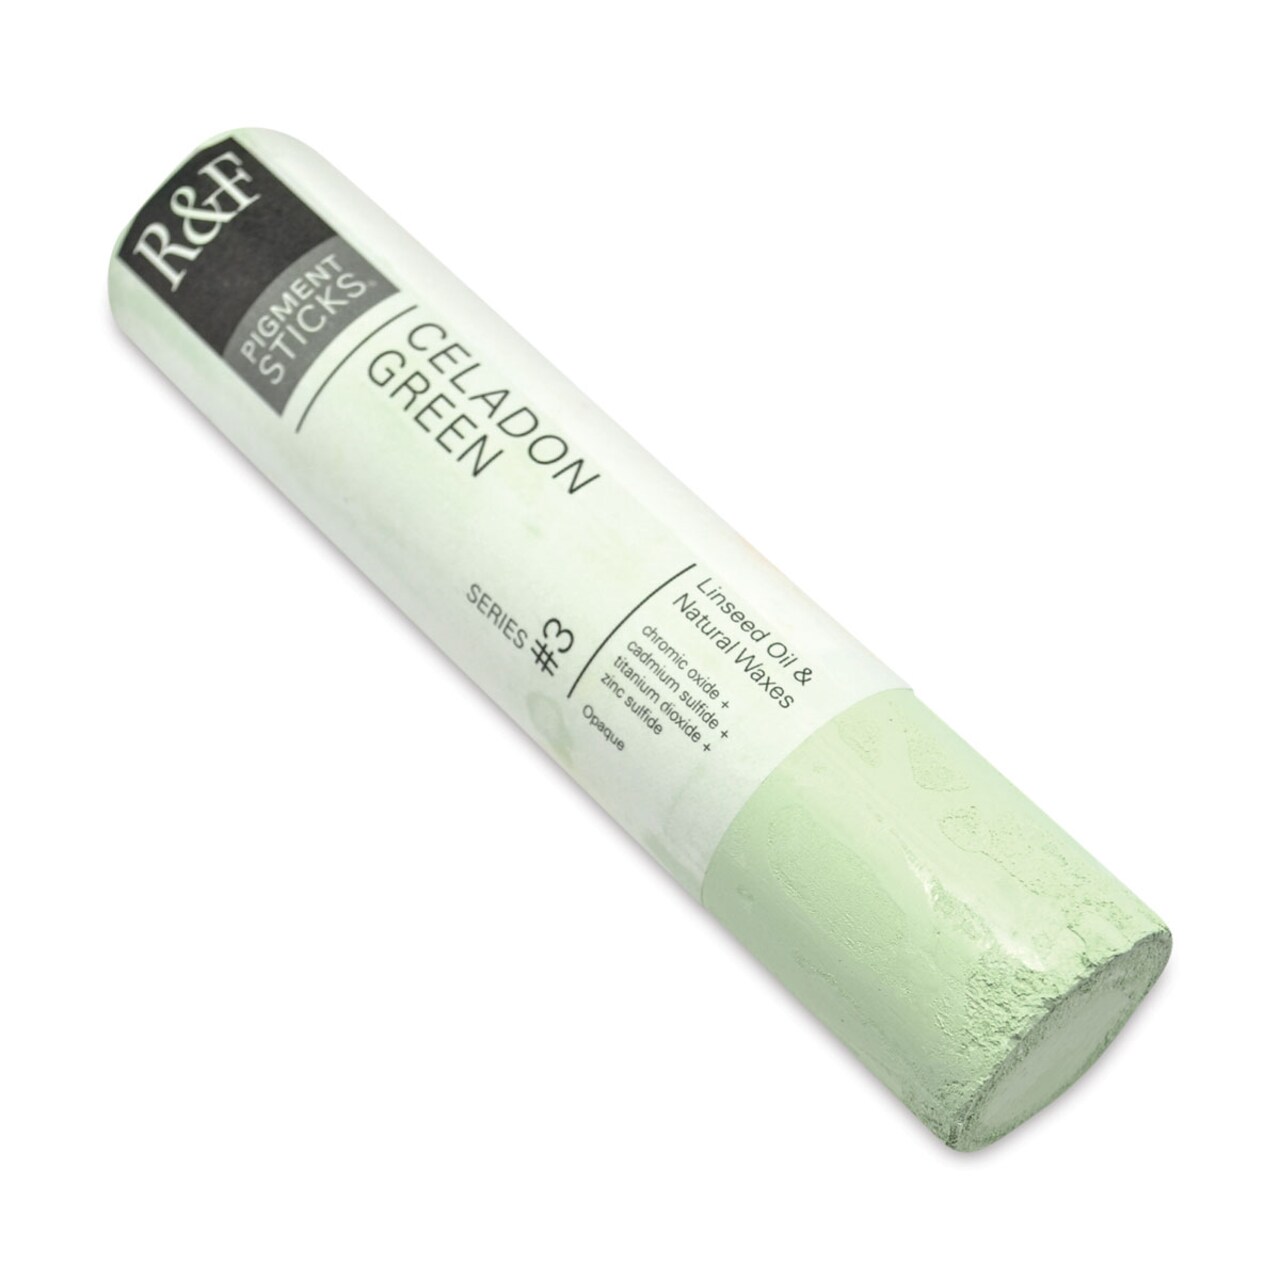 R&#x26;F Pigment Stick - Celadon Green, 188 ml stick